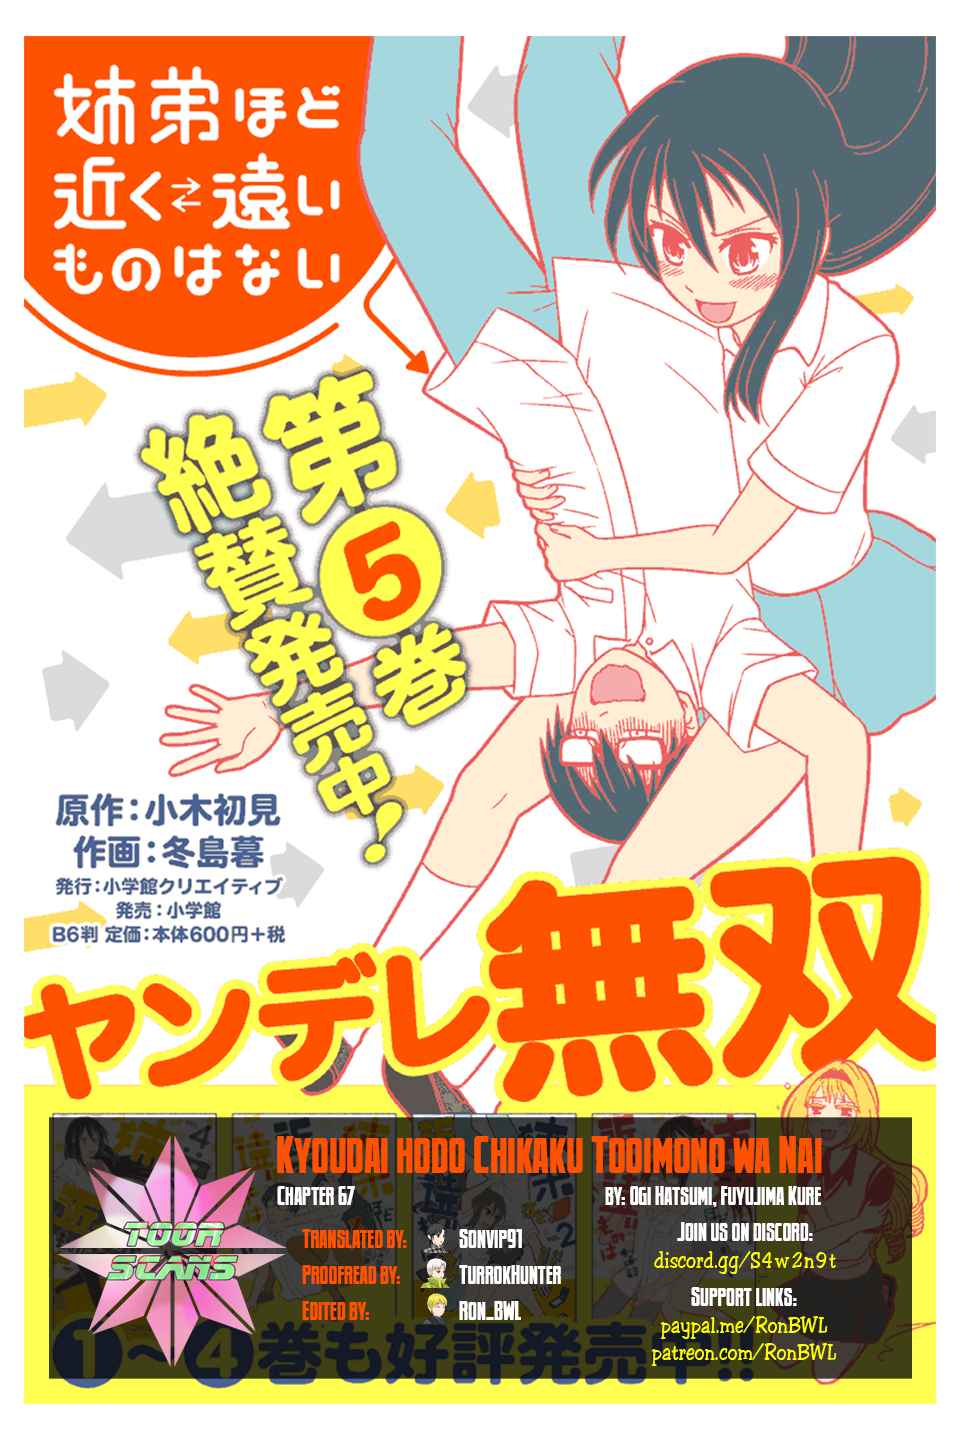 Kyoudai hodo Chikaku Tooimono wa Nai Vol. 5 Ch. 67 Everything's been prepared as Mai chan wants (Part 2)